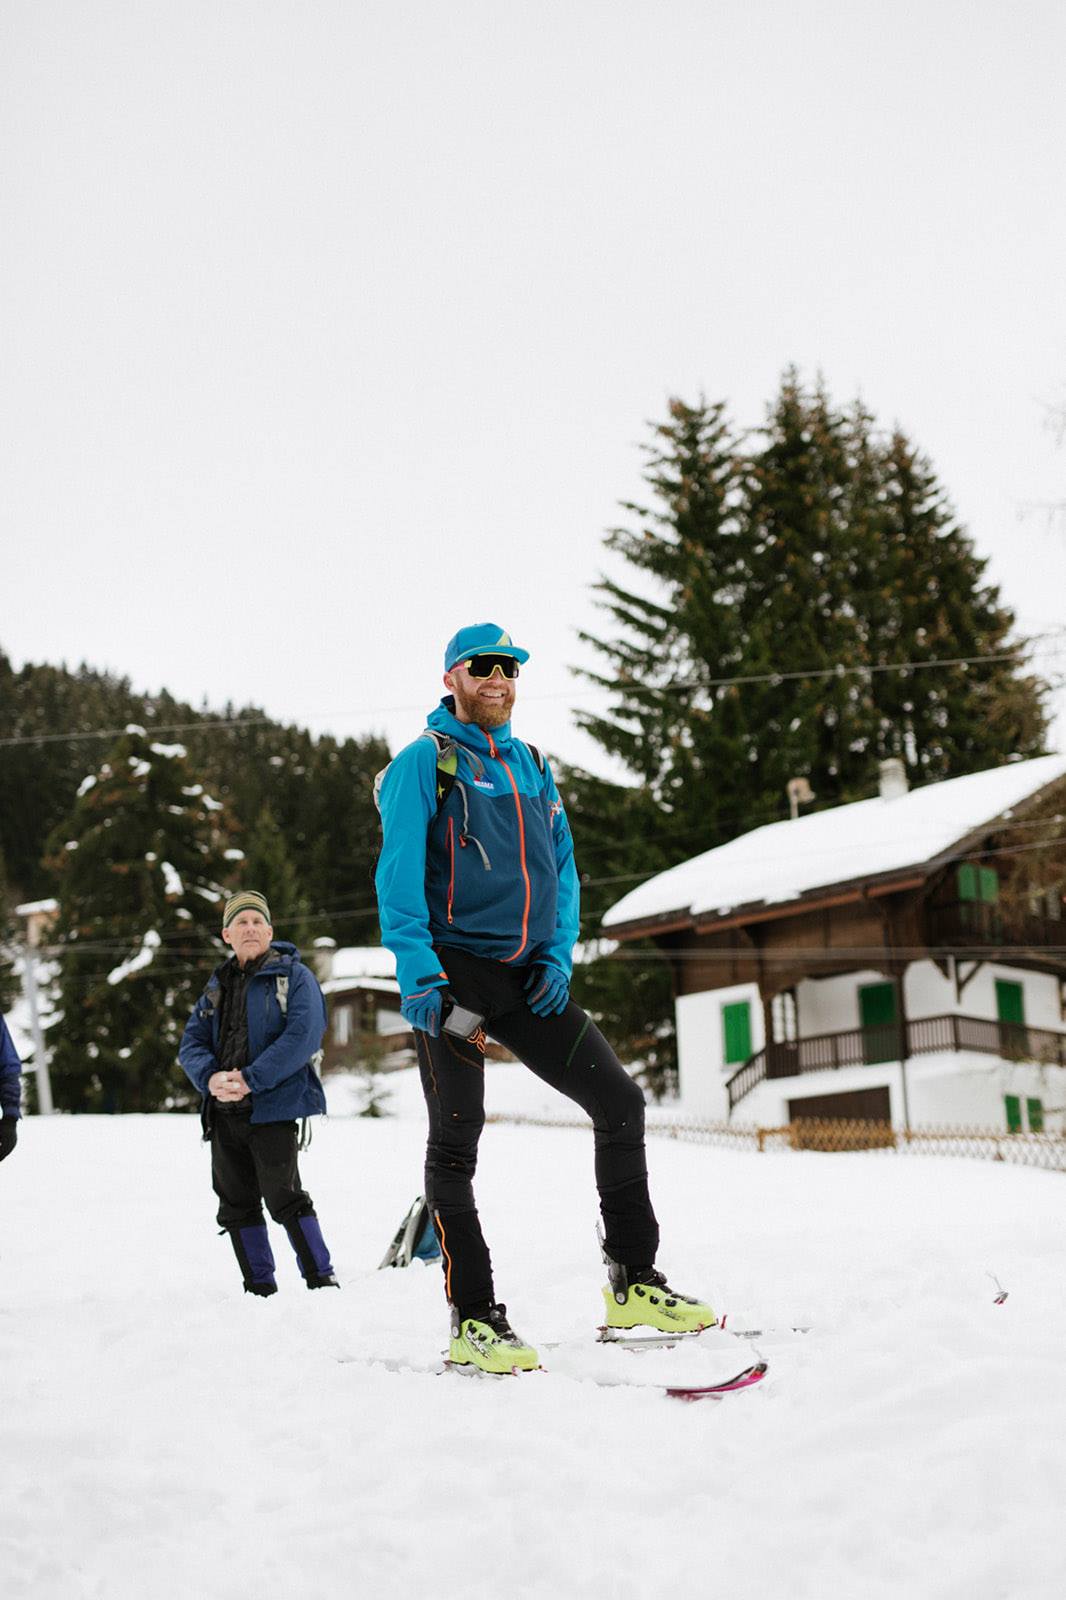 2019 Skimo World Championship in Villars, Switzerland